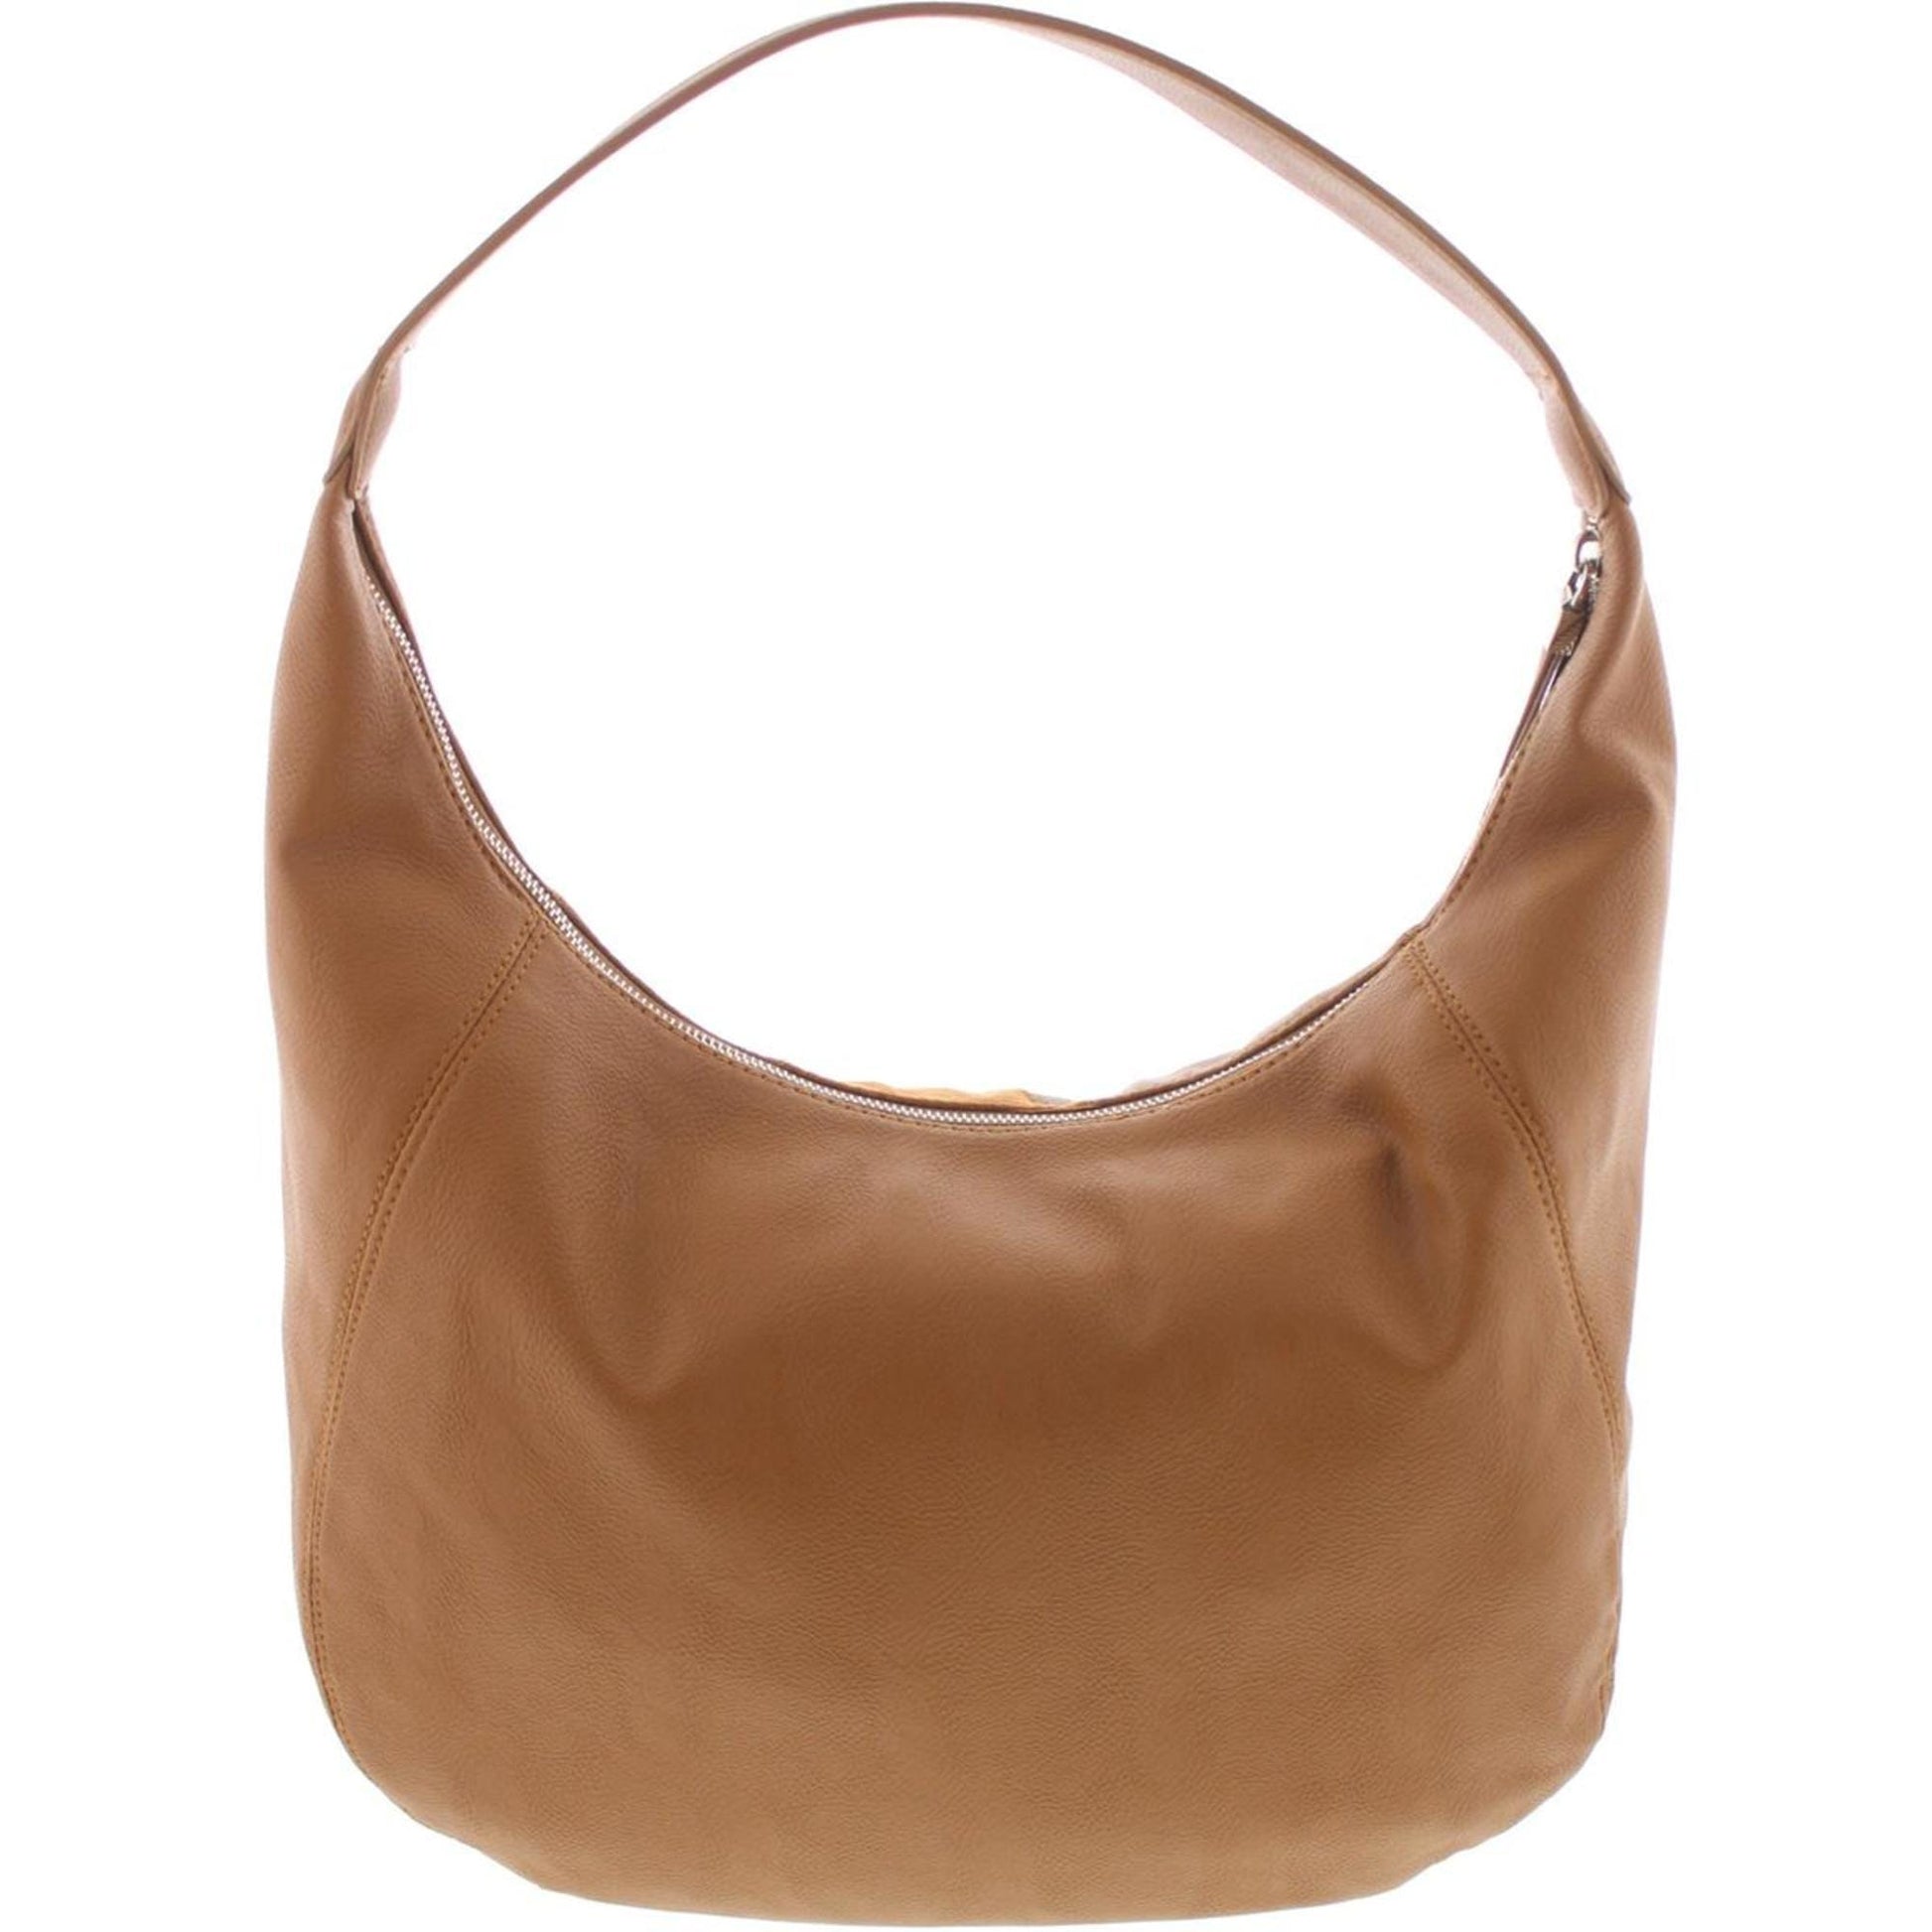 Nine West Handbags Faux Leather Patchwork Hobo Handbag